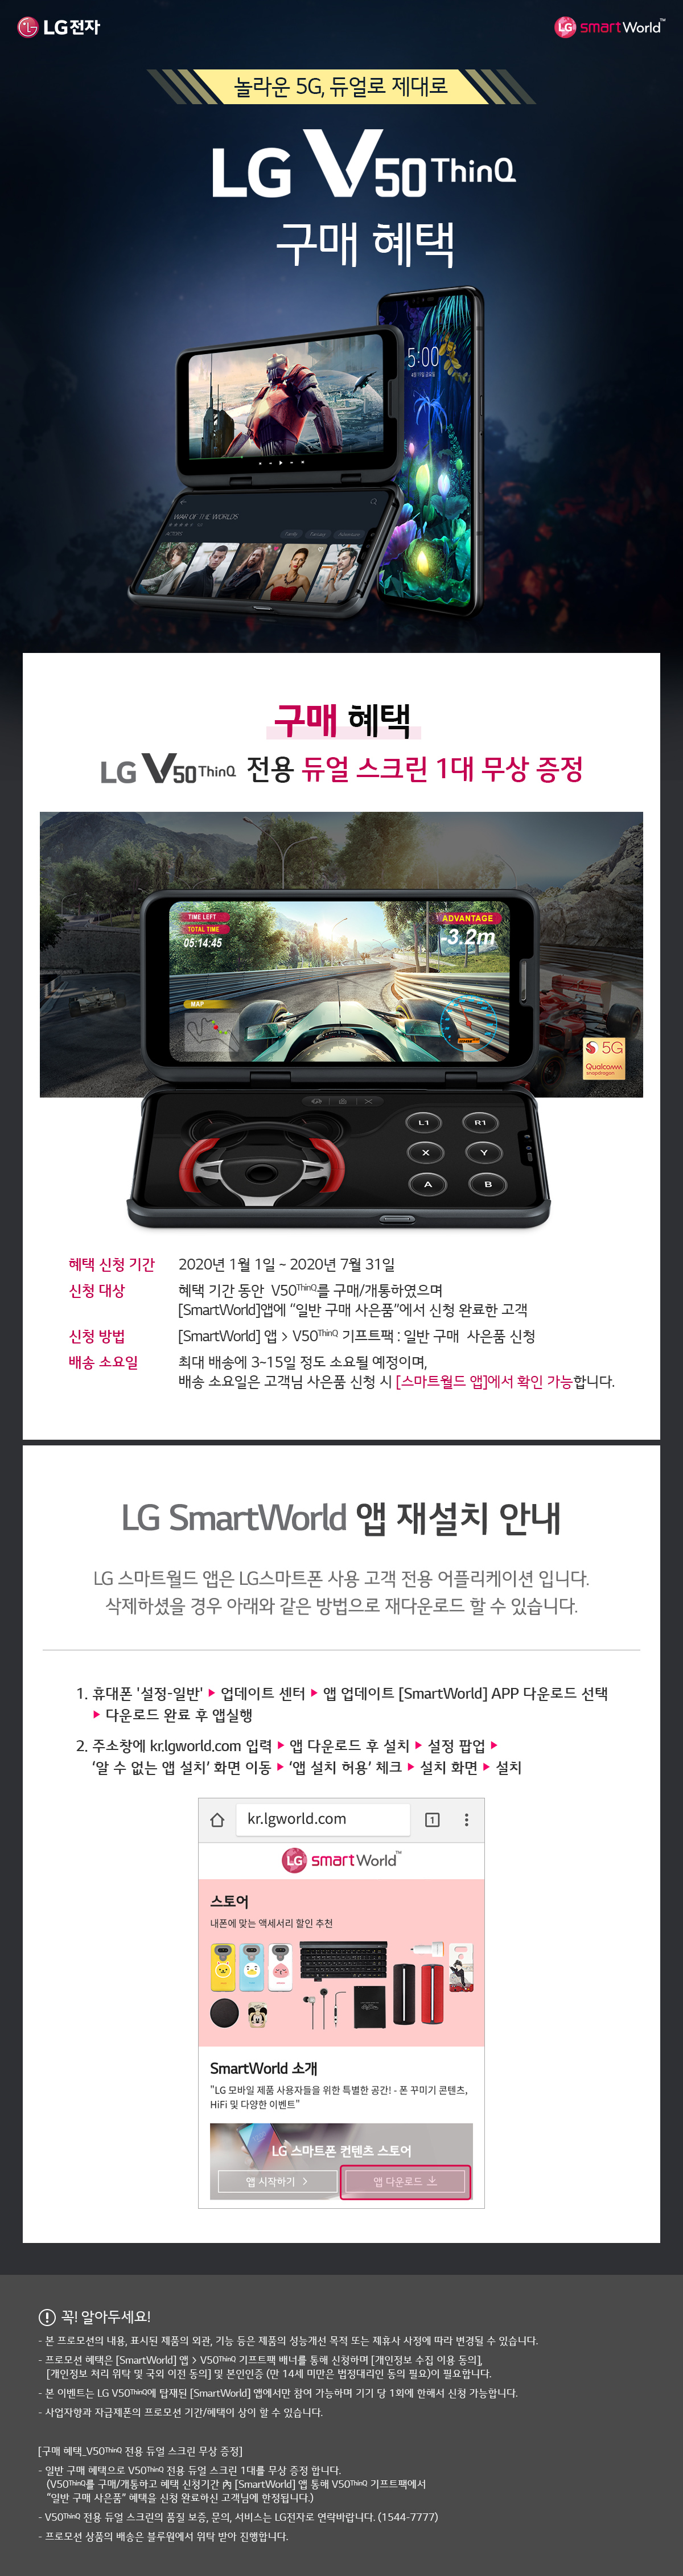 LG V50 ThinQ 구매 혜택 이미지